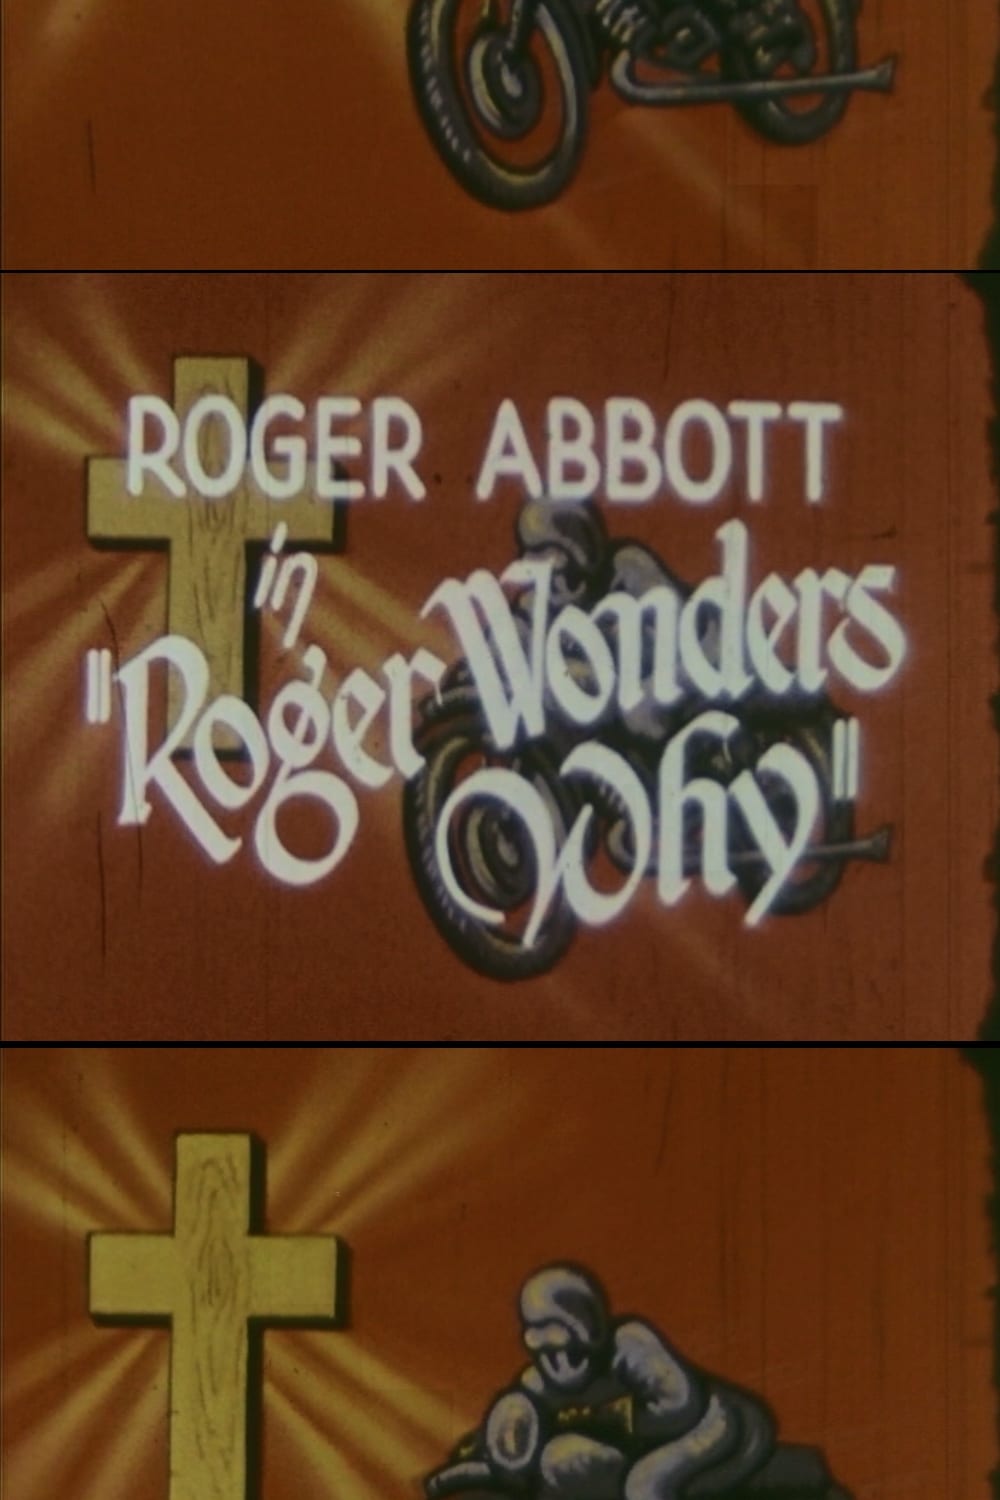 Roger Wonders Why